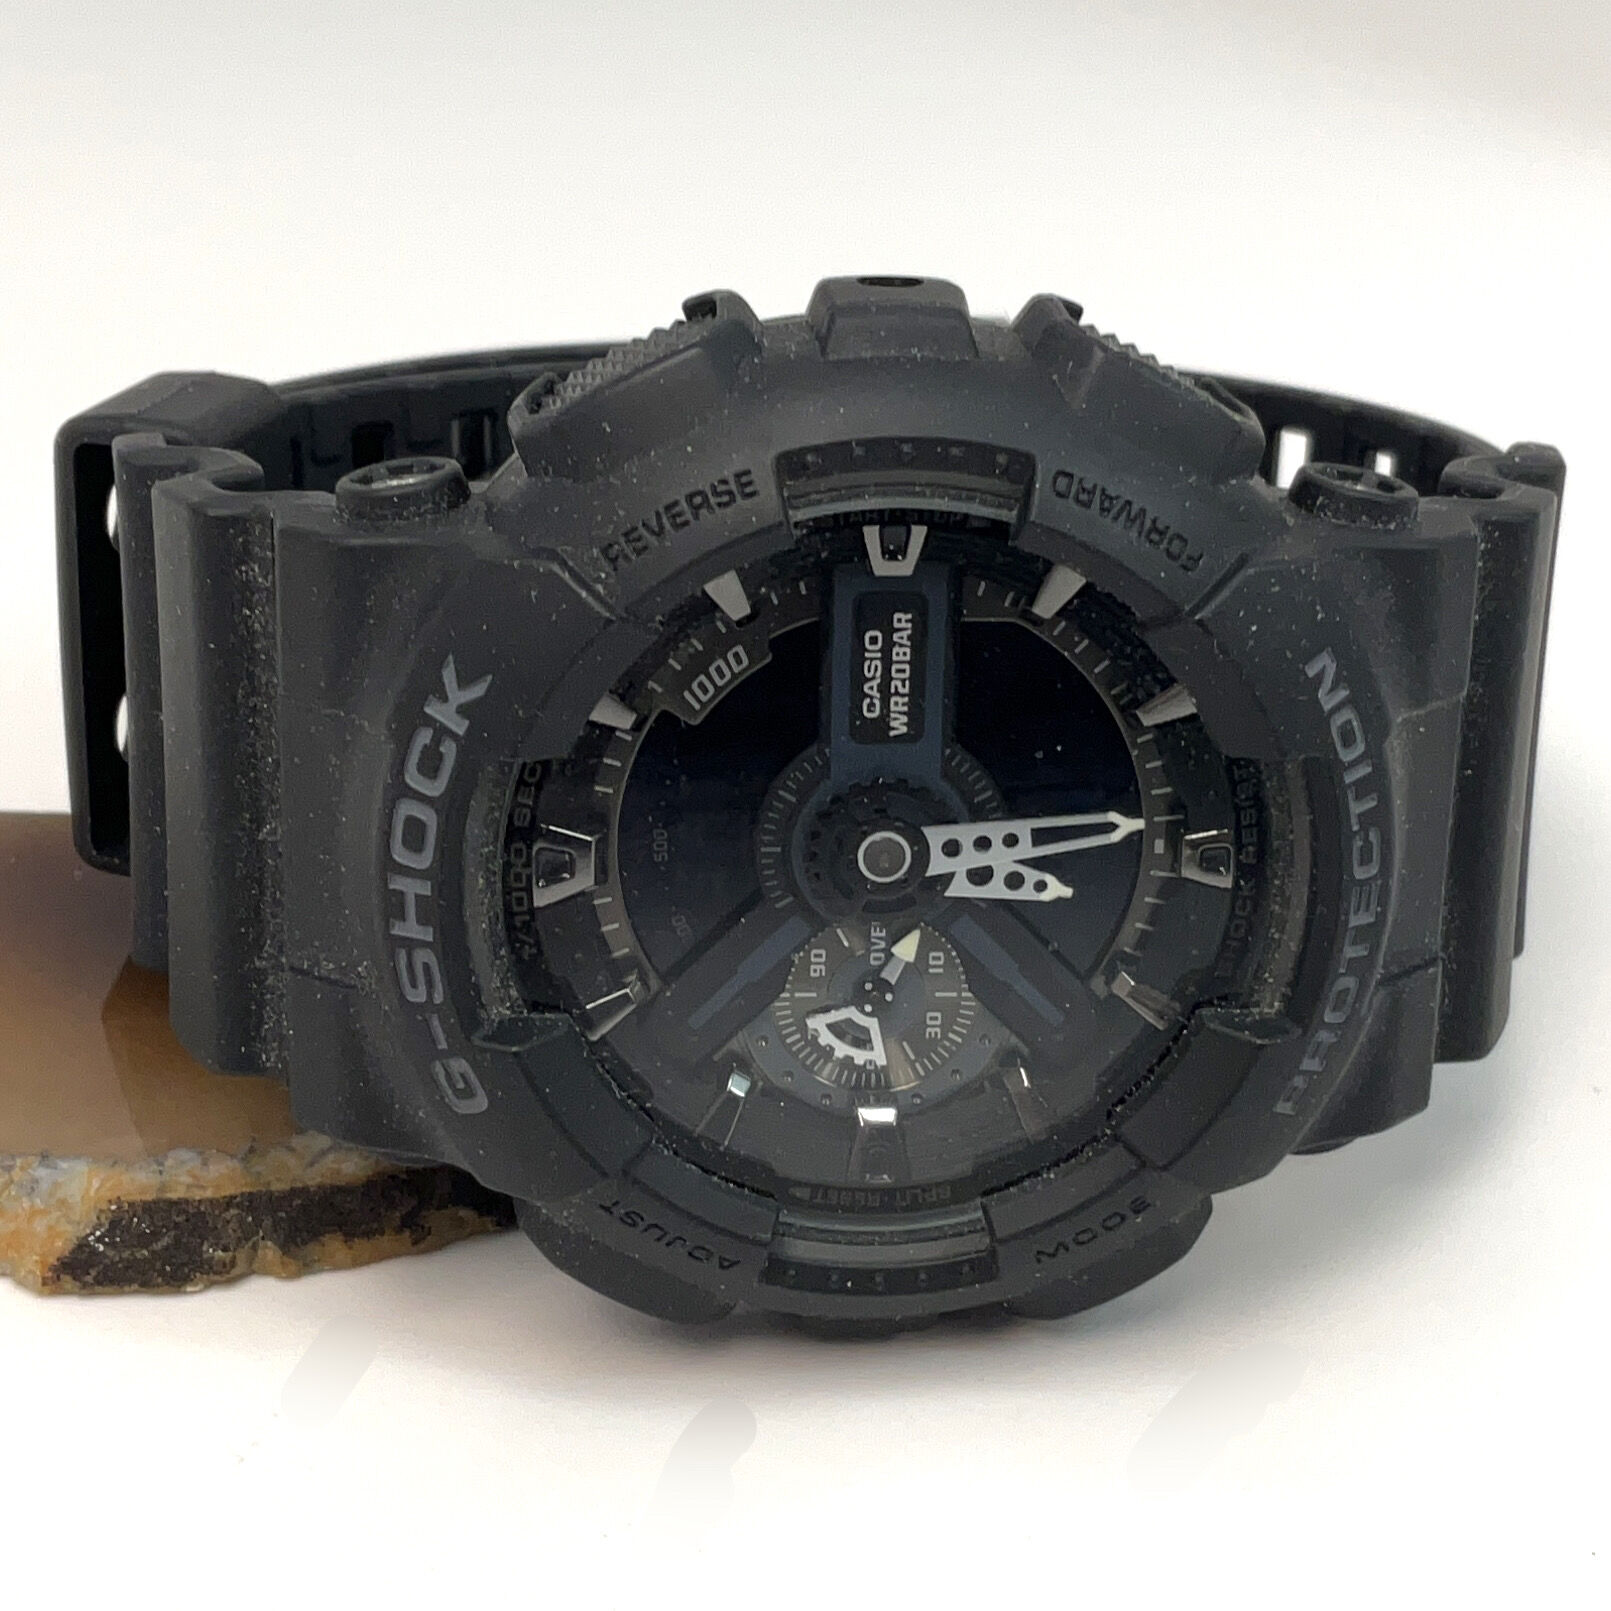 Designer Casio G-Shock WR20BAR GA-110 Black Antimagnetic Analog Wrist Watch